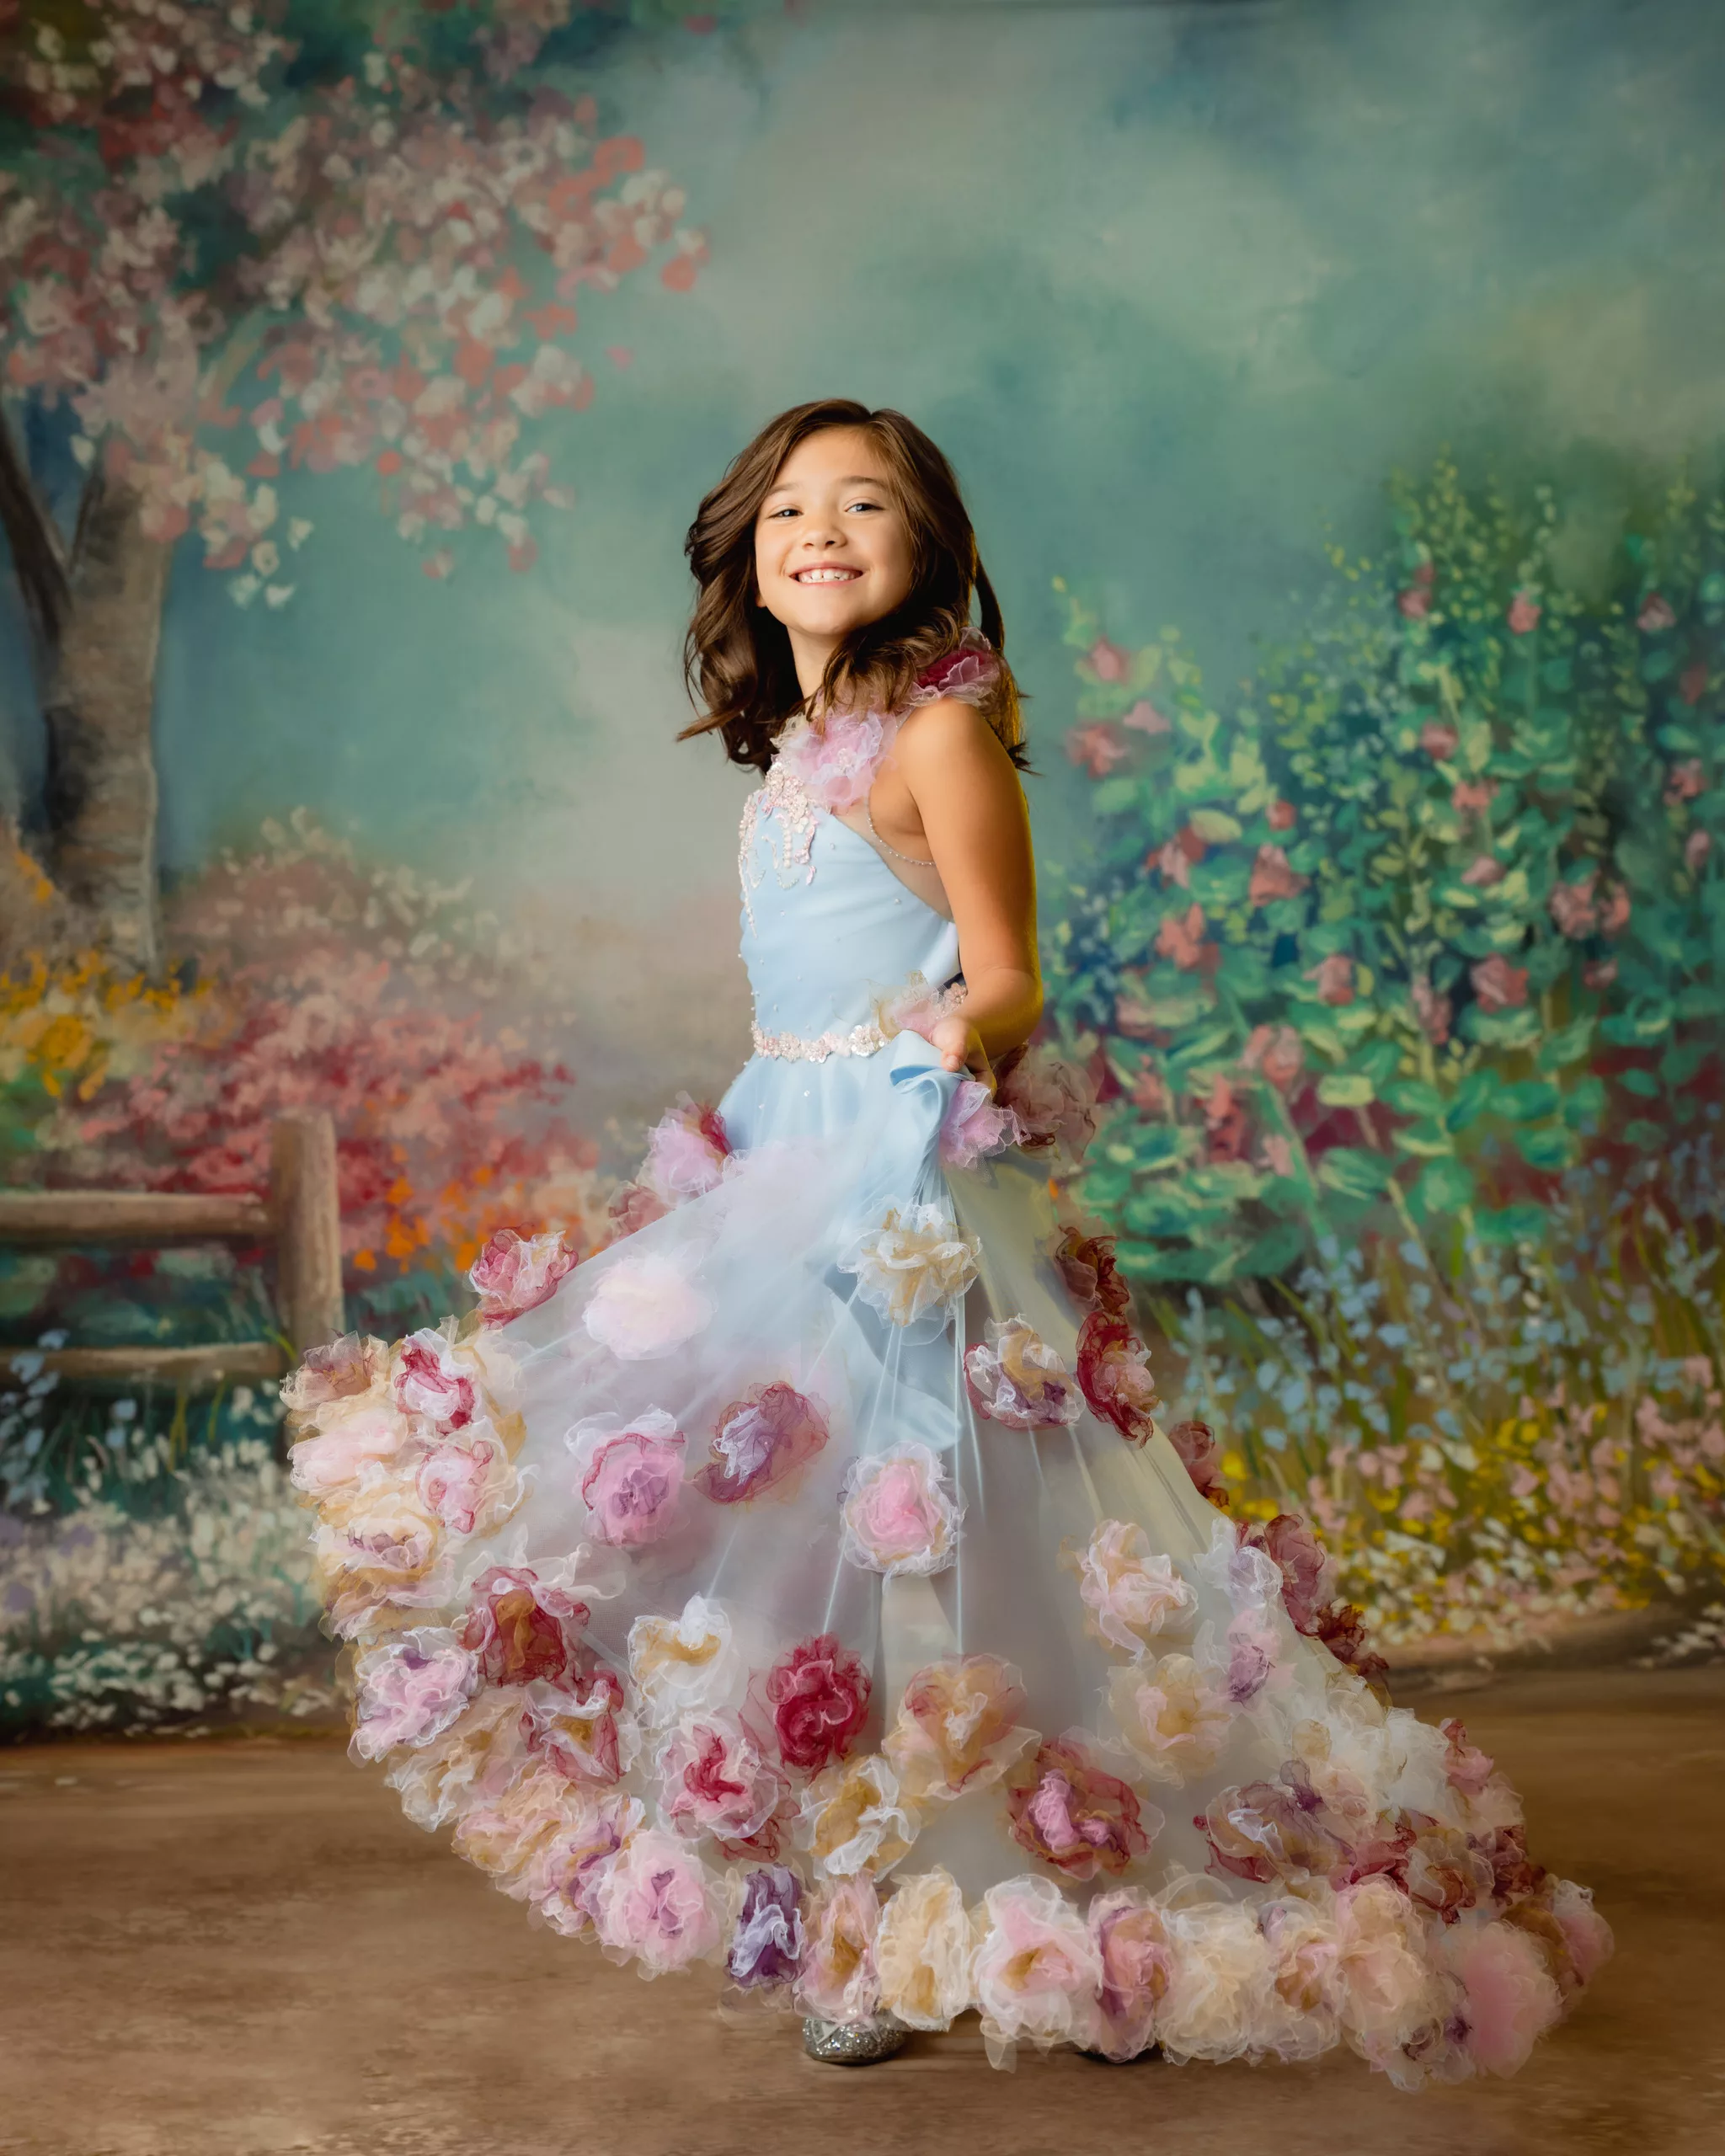 Orlando Family Photographer Birthday Photoshoot flower dress